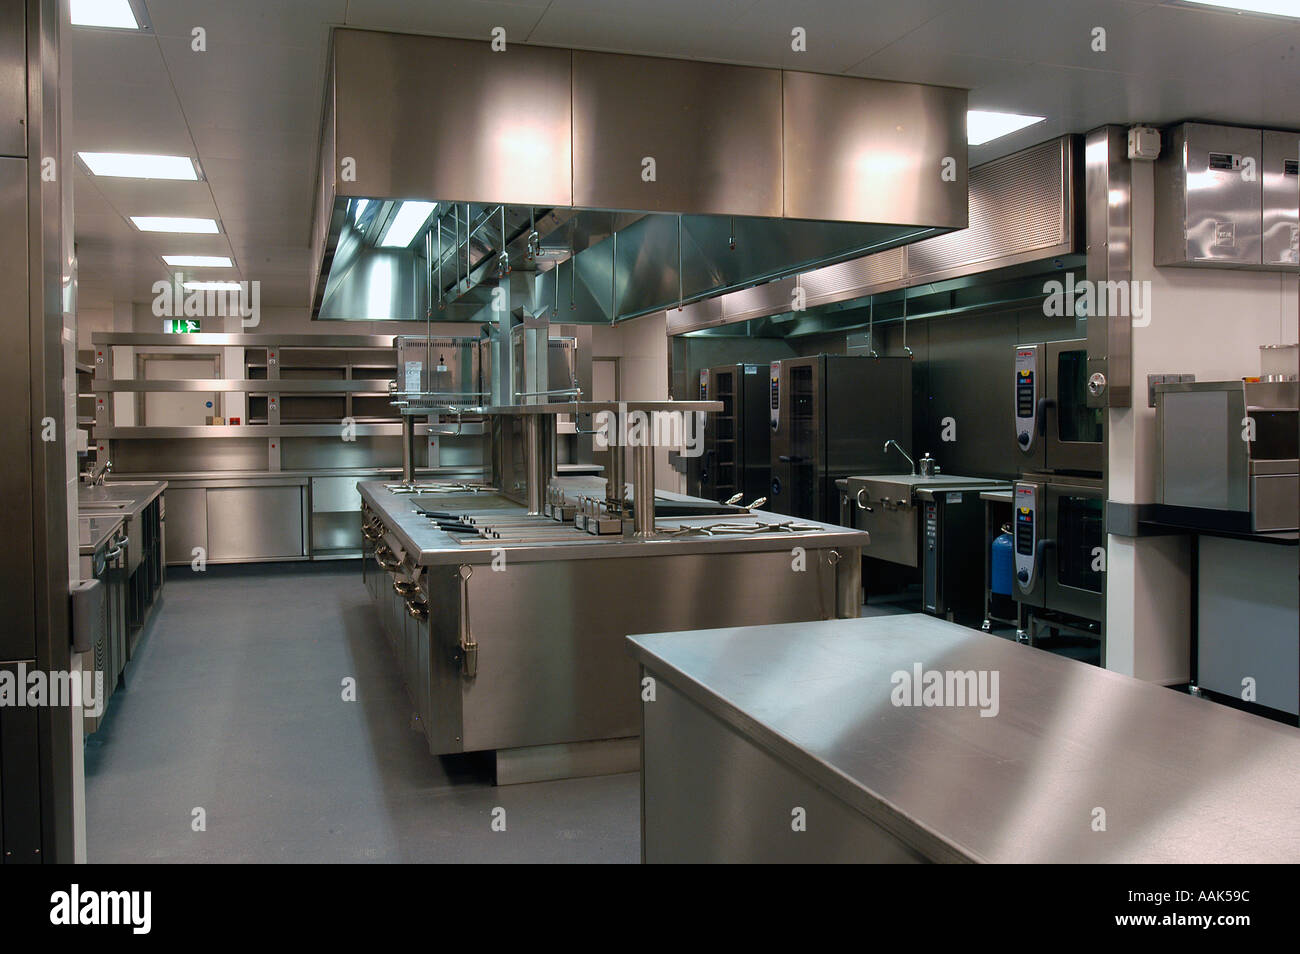 Interior of a modern hotel kitchen Stock Photo   Alamy